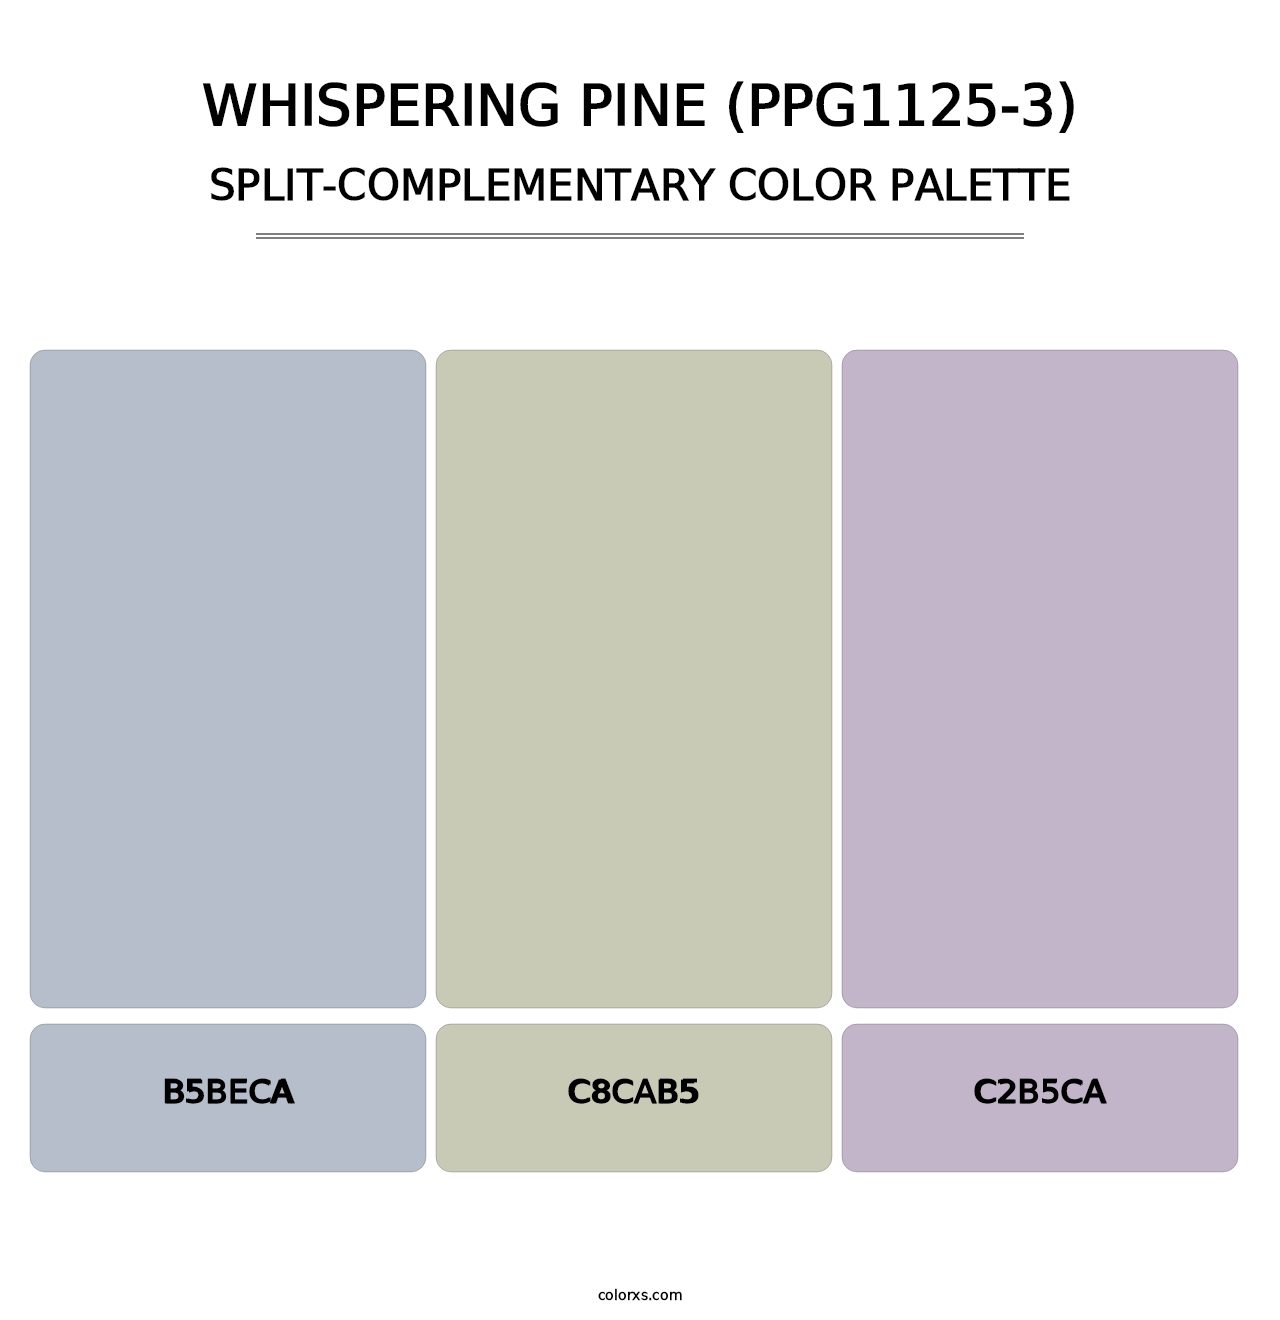 Whispering Pine (PPG1125-3) - Split-Complementary Color Palette